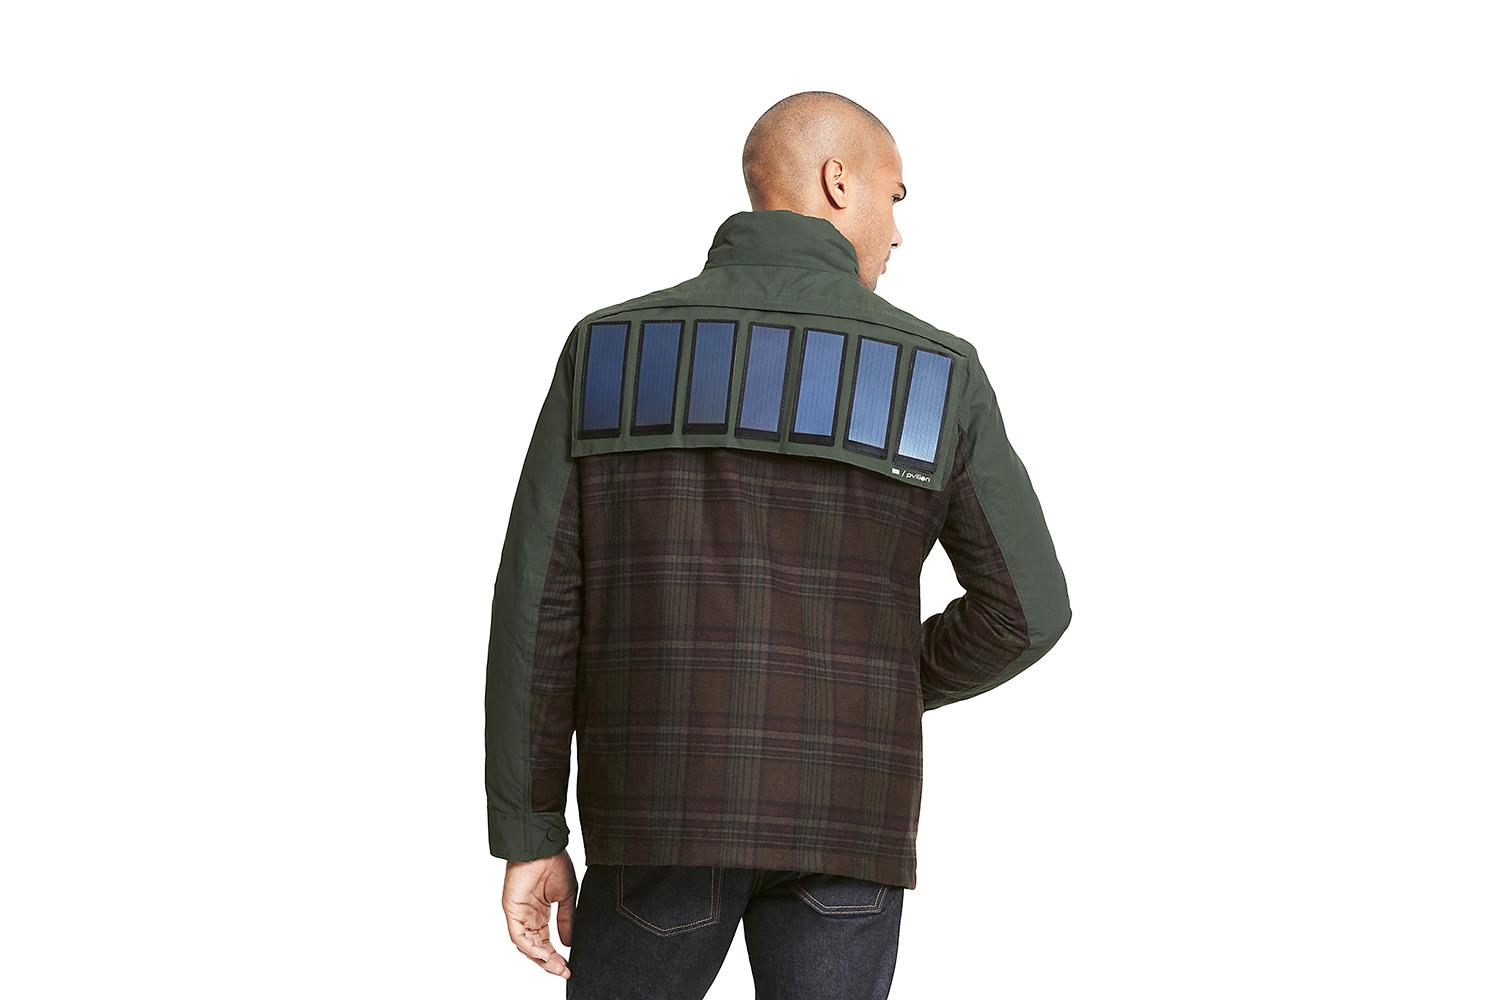 Tommy Hilfiger solar jacket